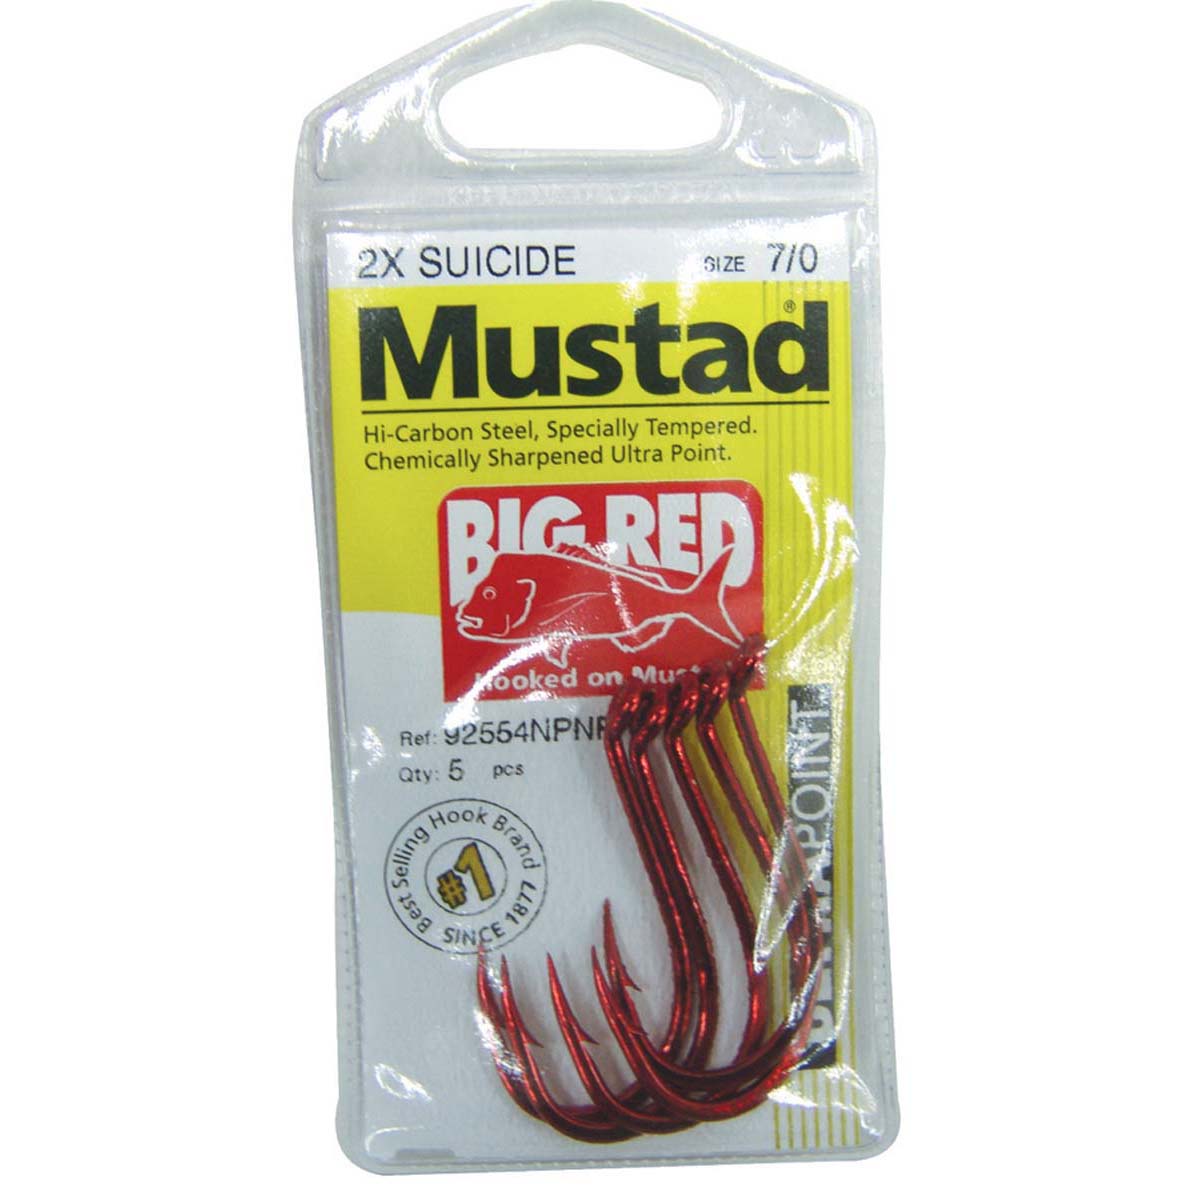 Mustad Big Red Suicide Hooks 6 / 0 5 Pack